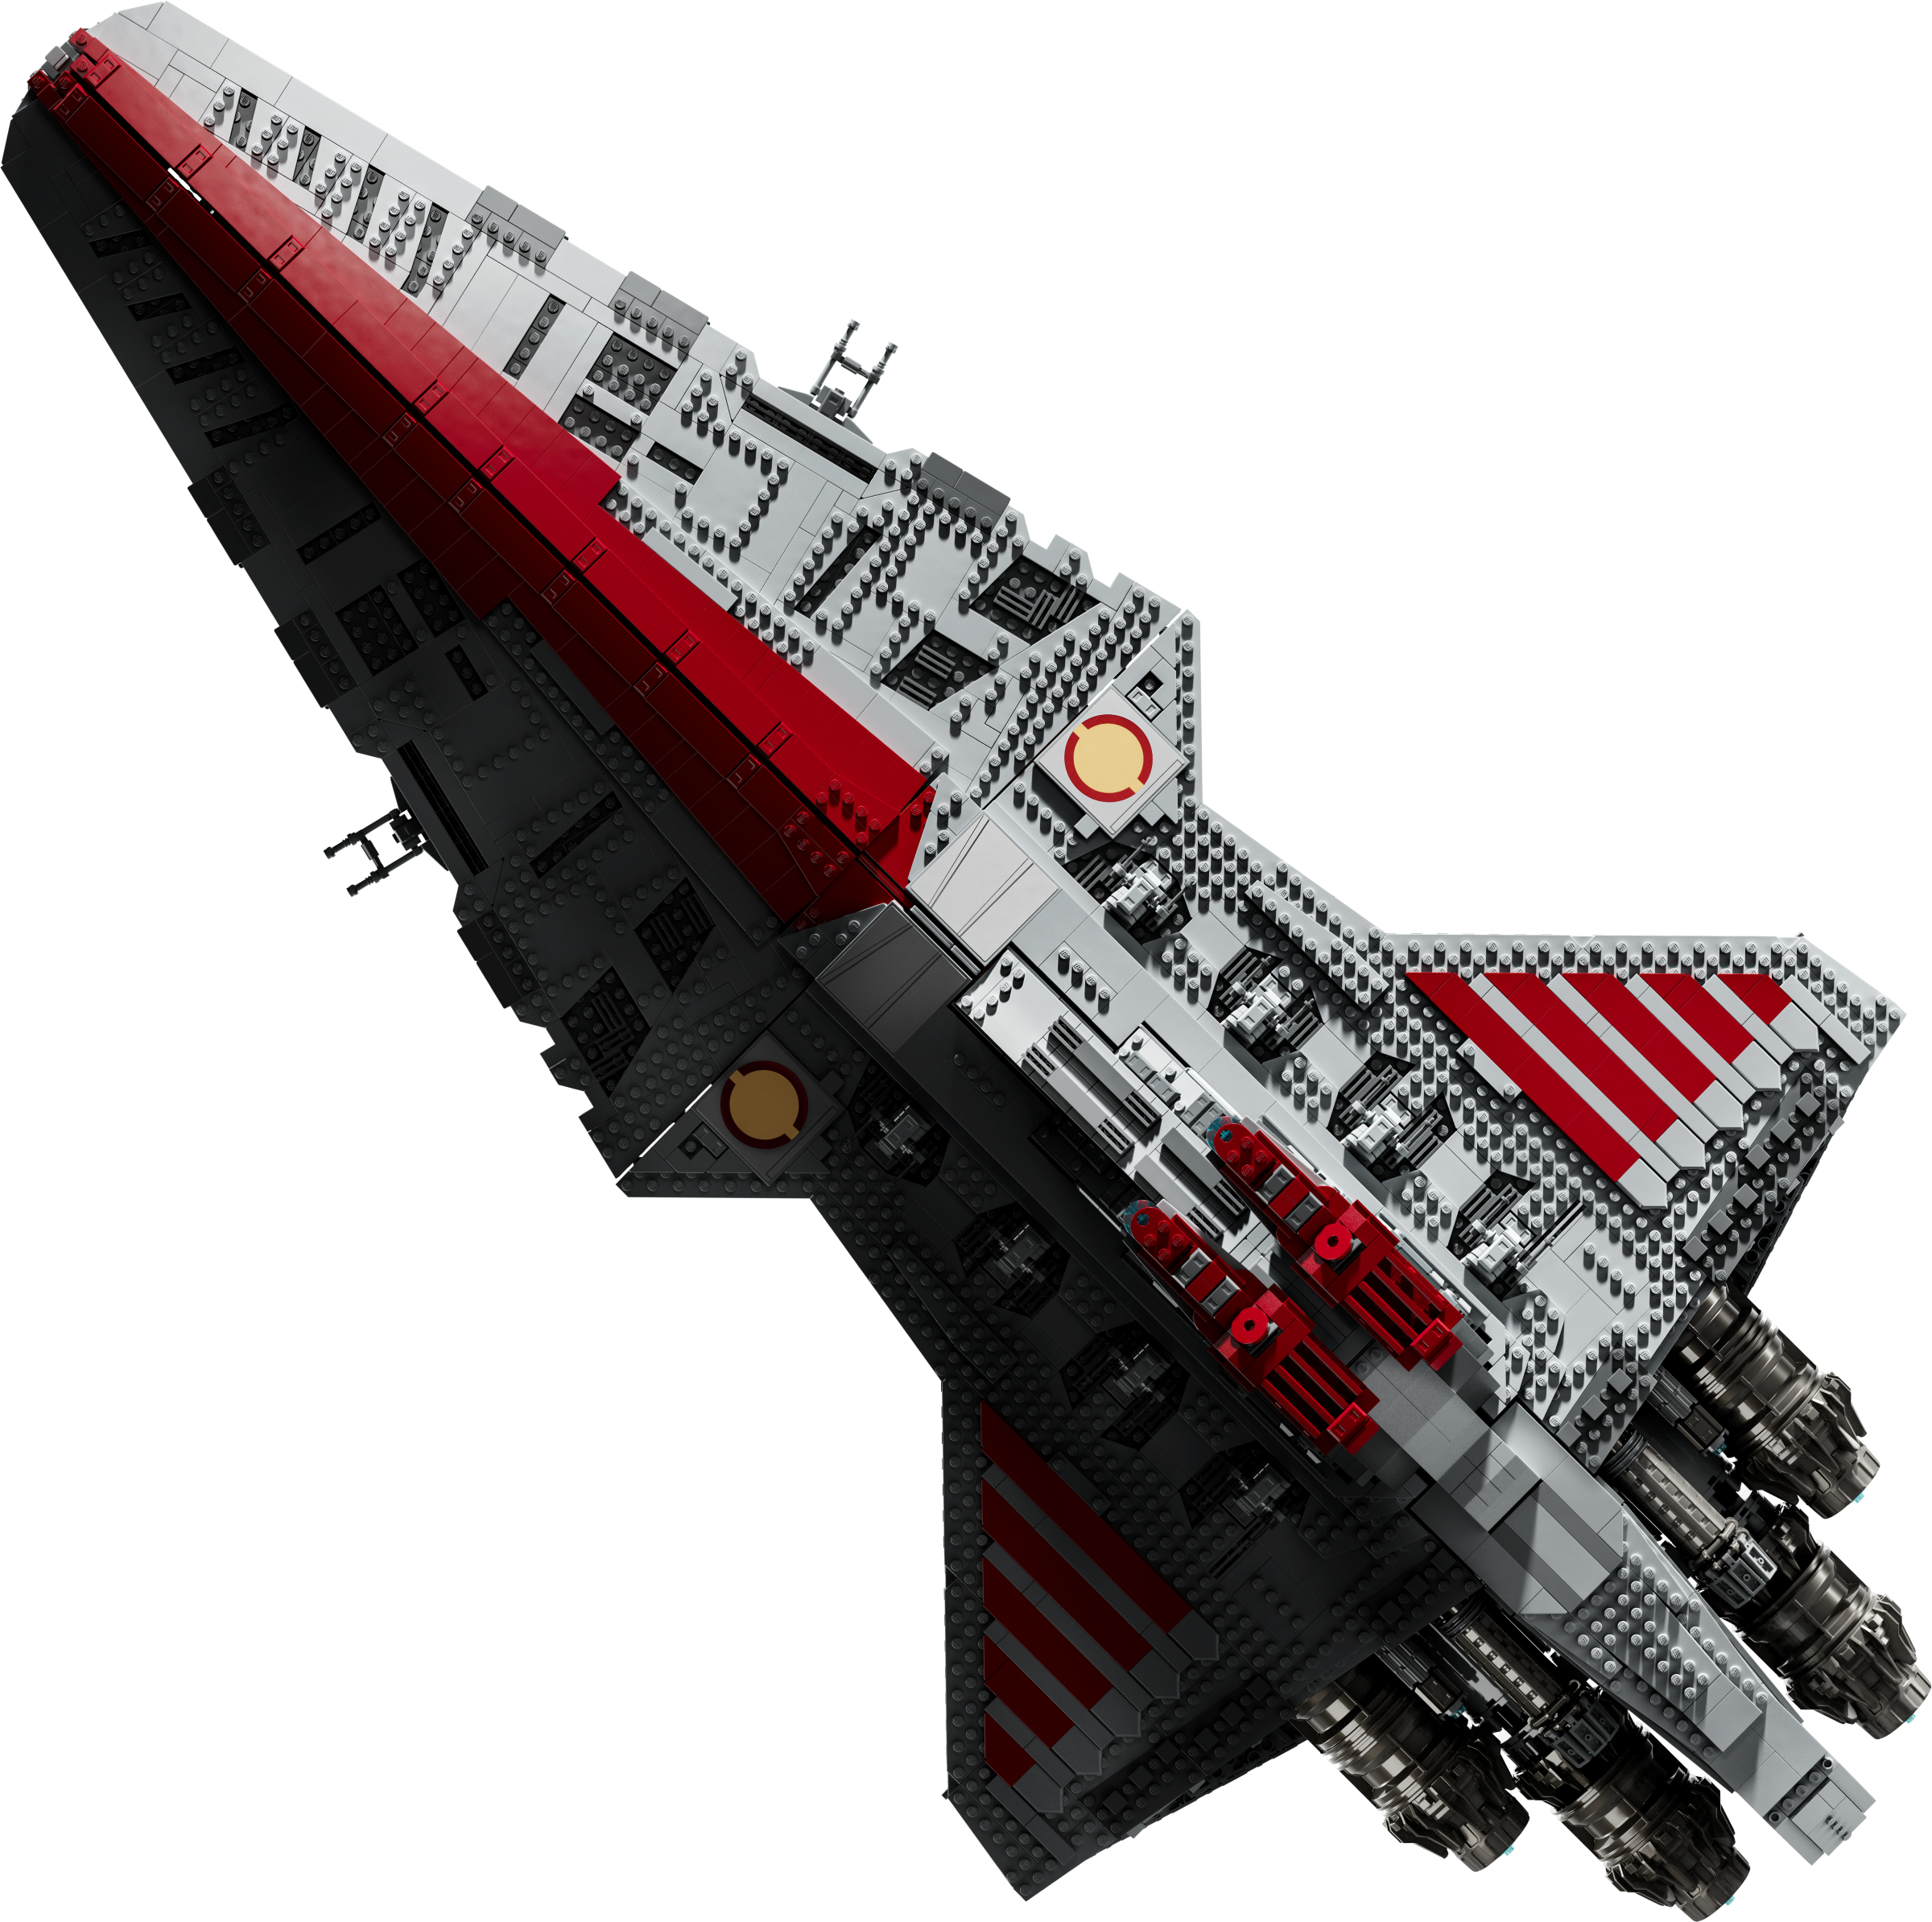 Instructions: UCS Venator-class Star Destroyer 1.0